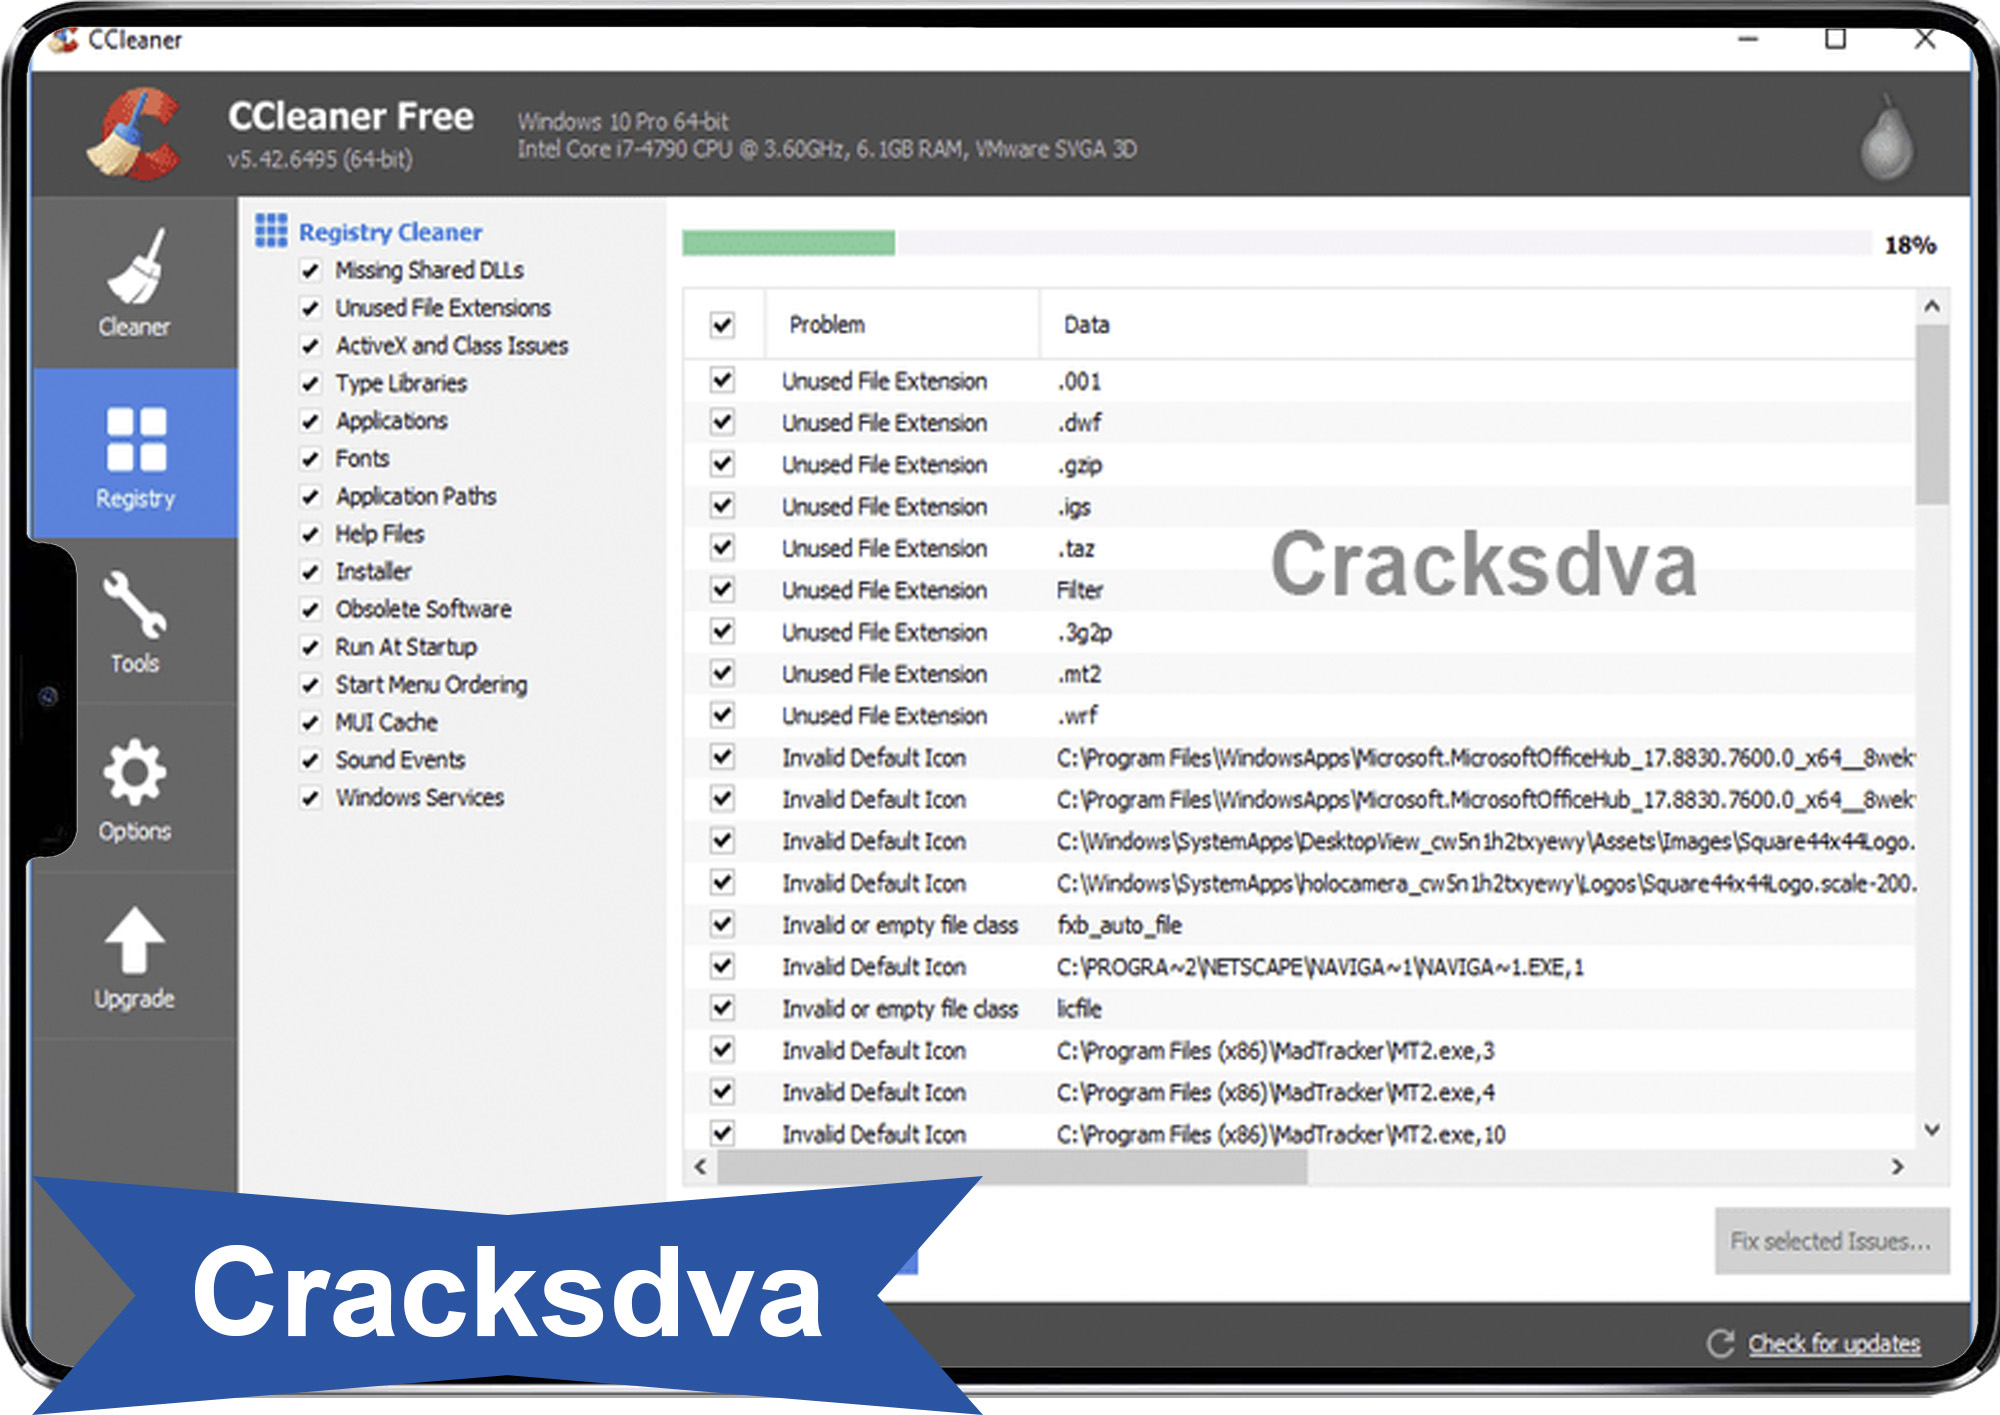 ccleaner pro crack file free download